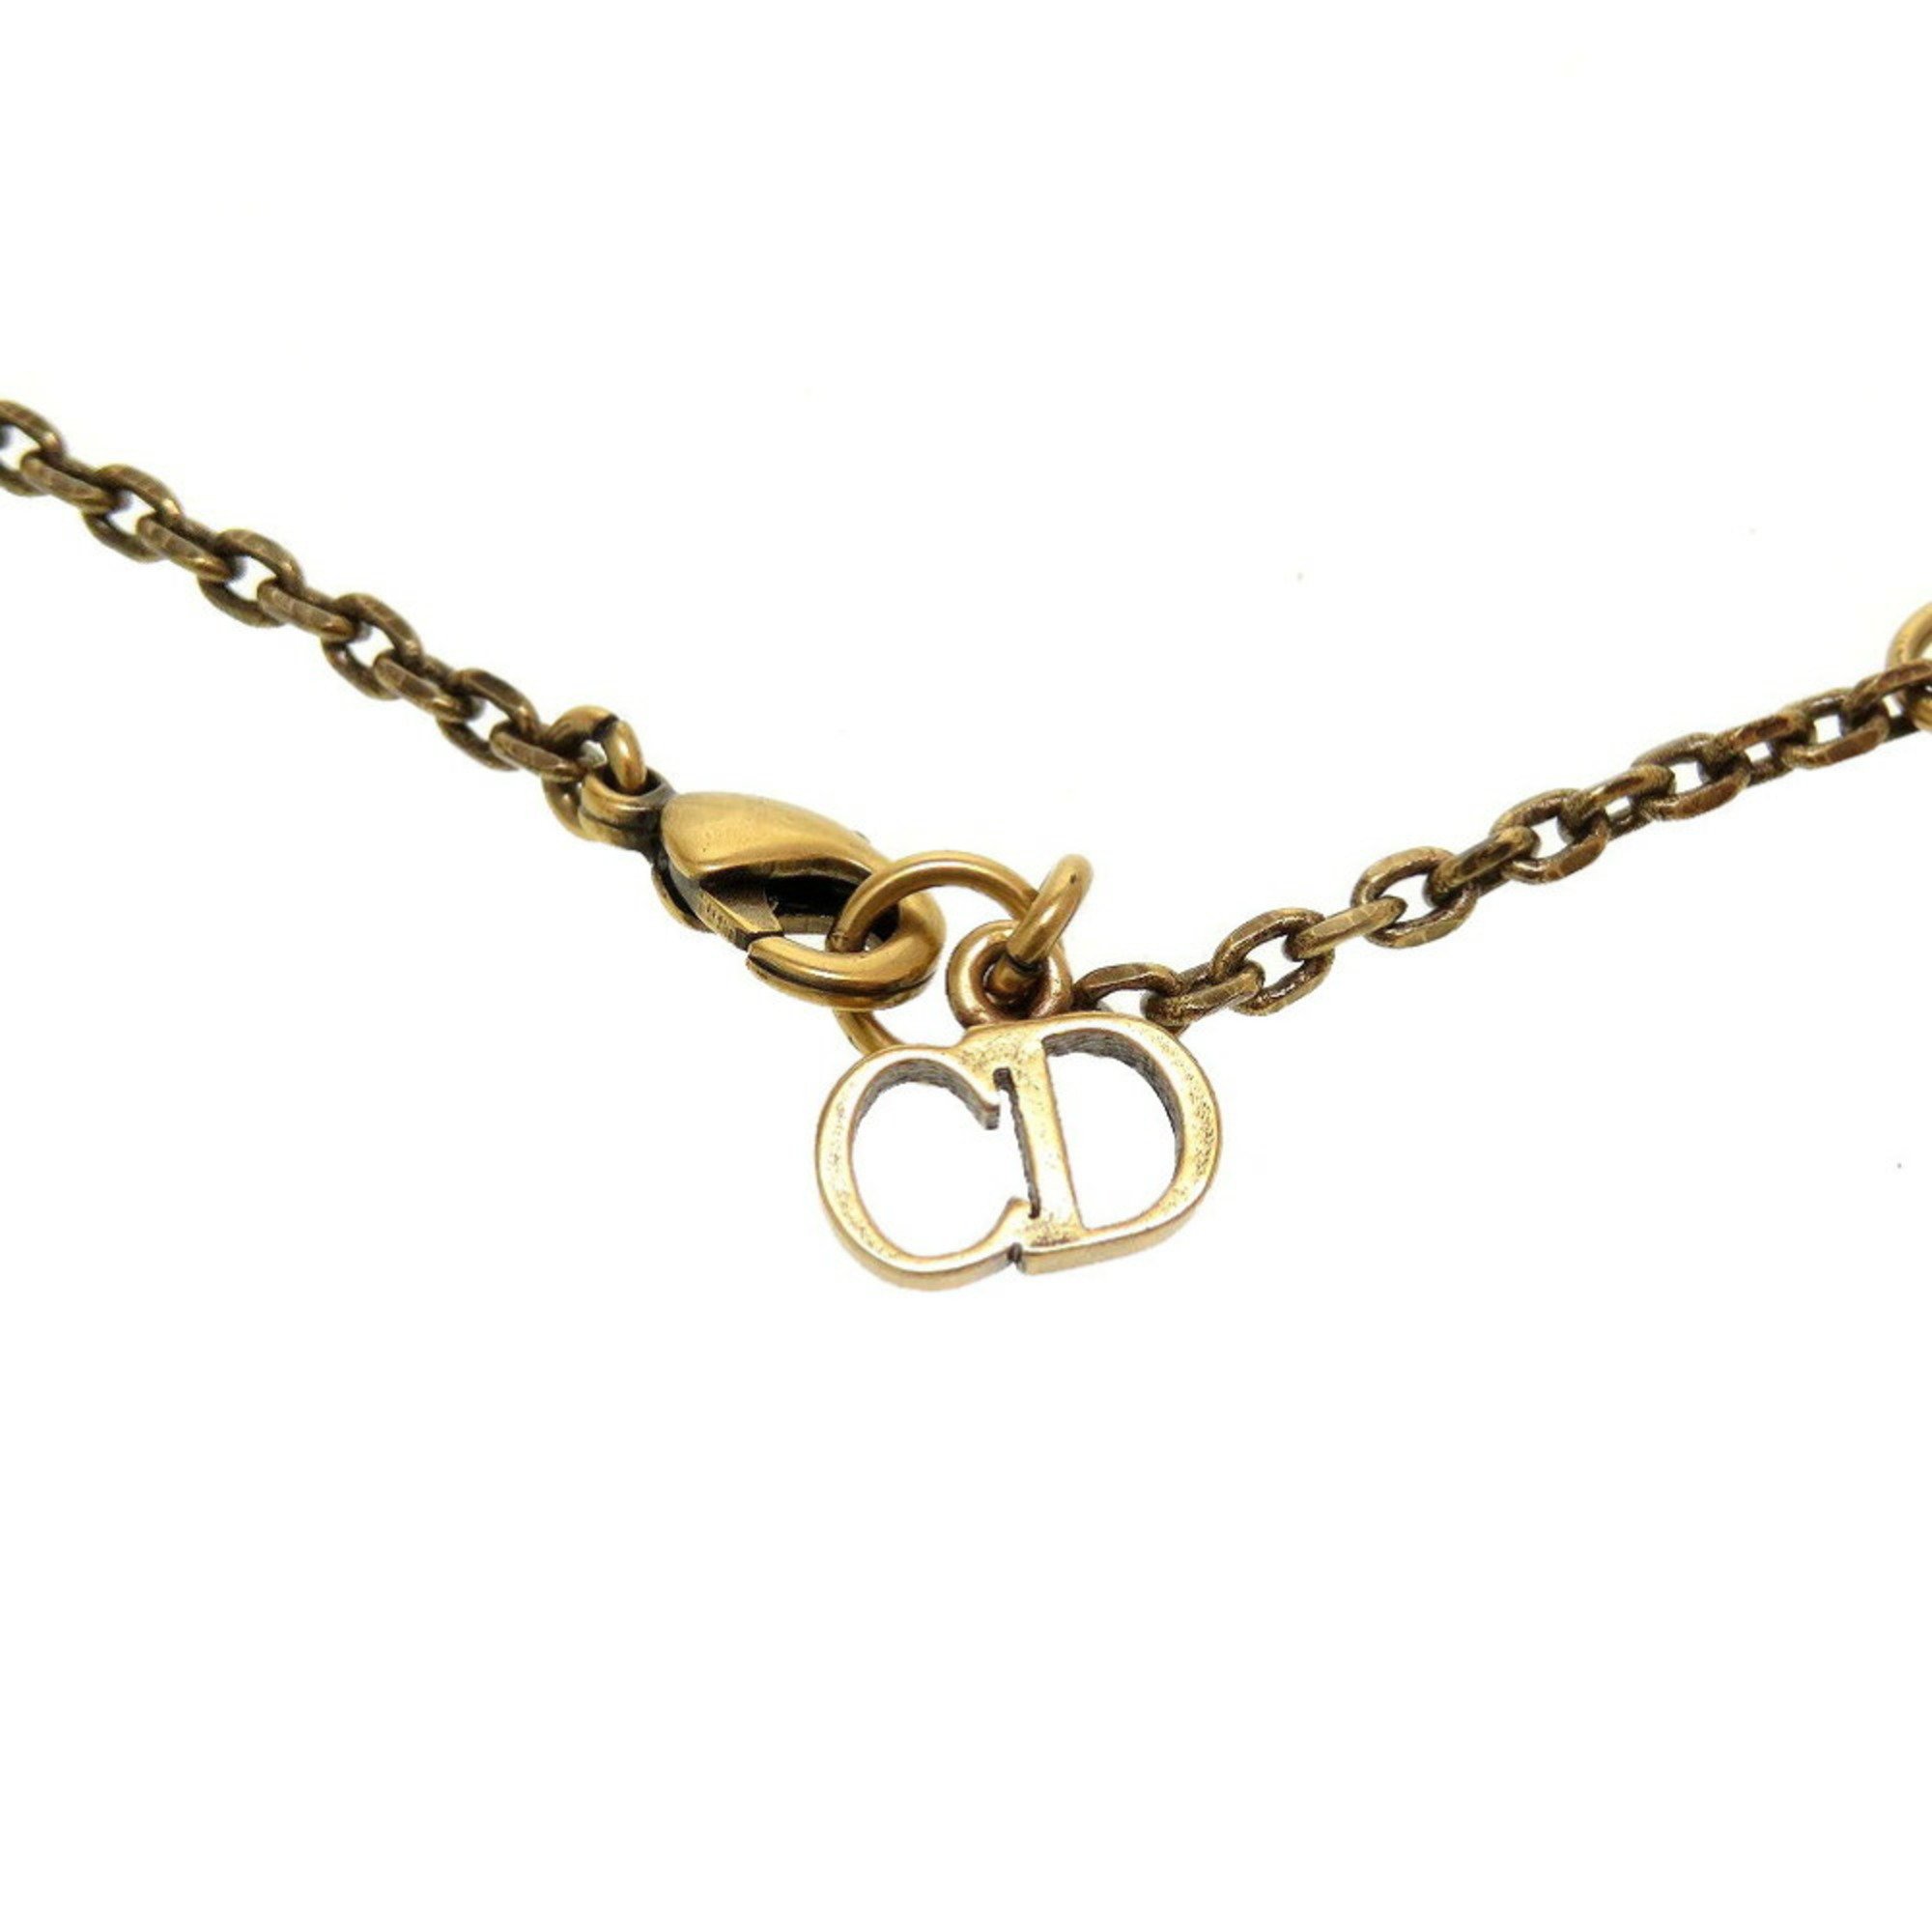 Christian Dior J'dior metal gold necklace